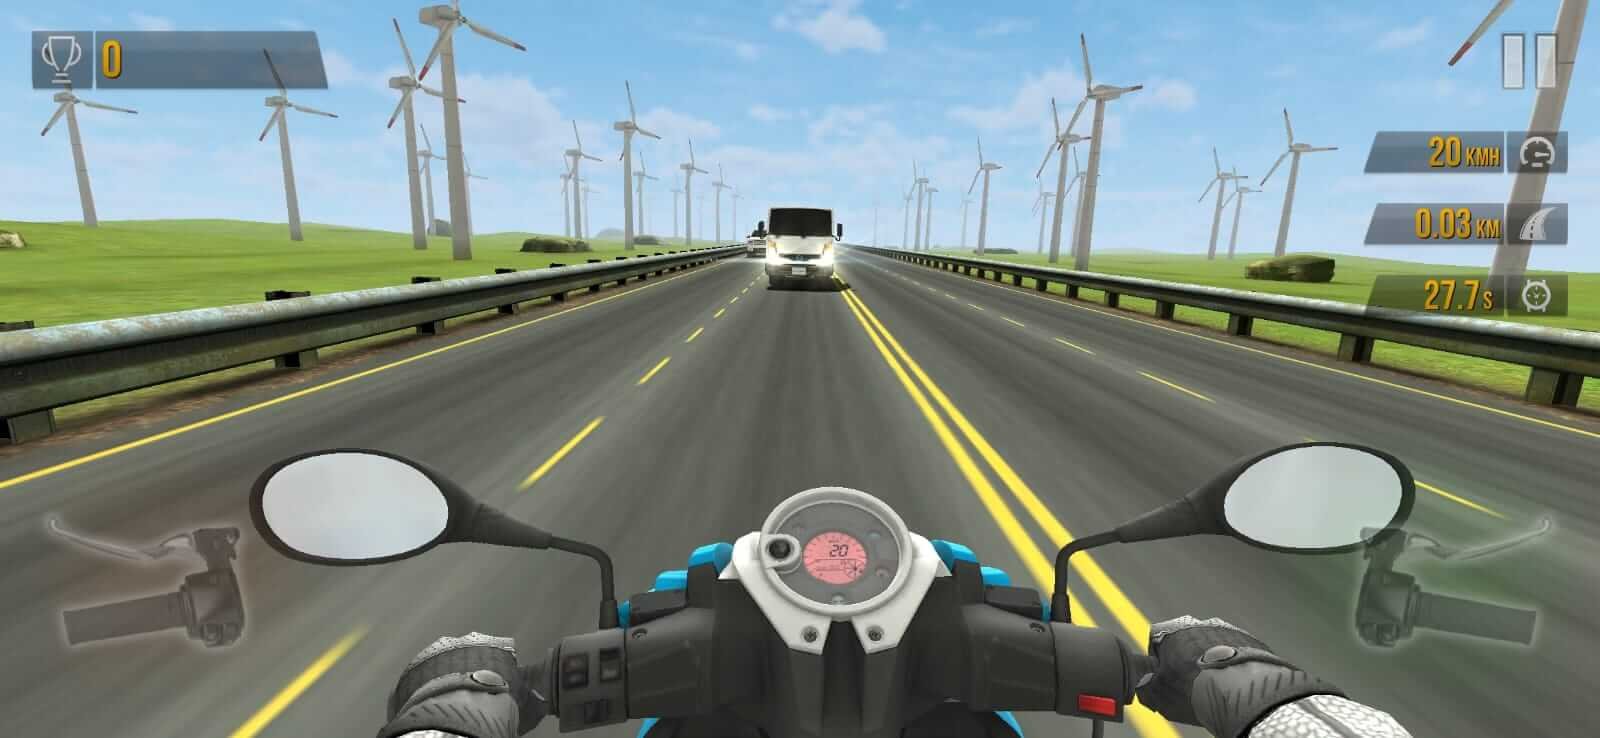 Download Traffic Rider MOD